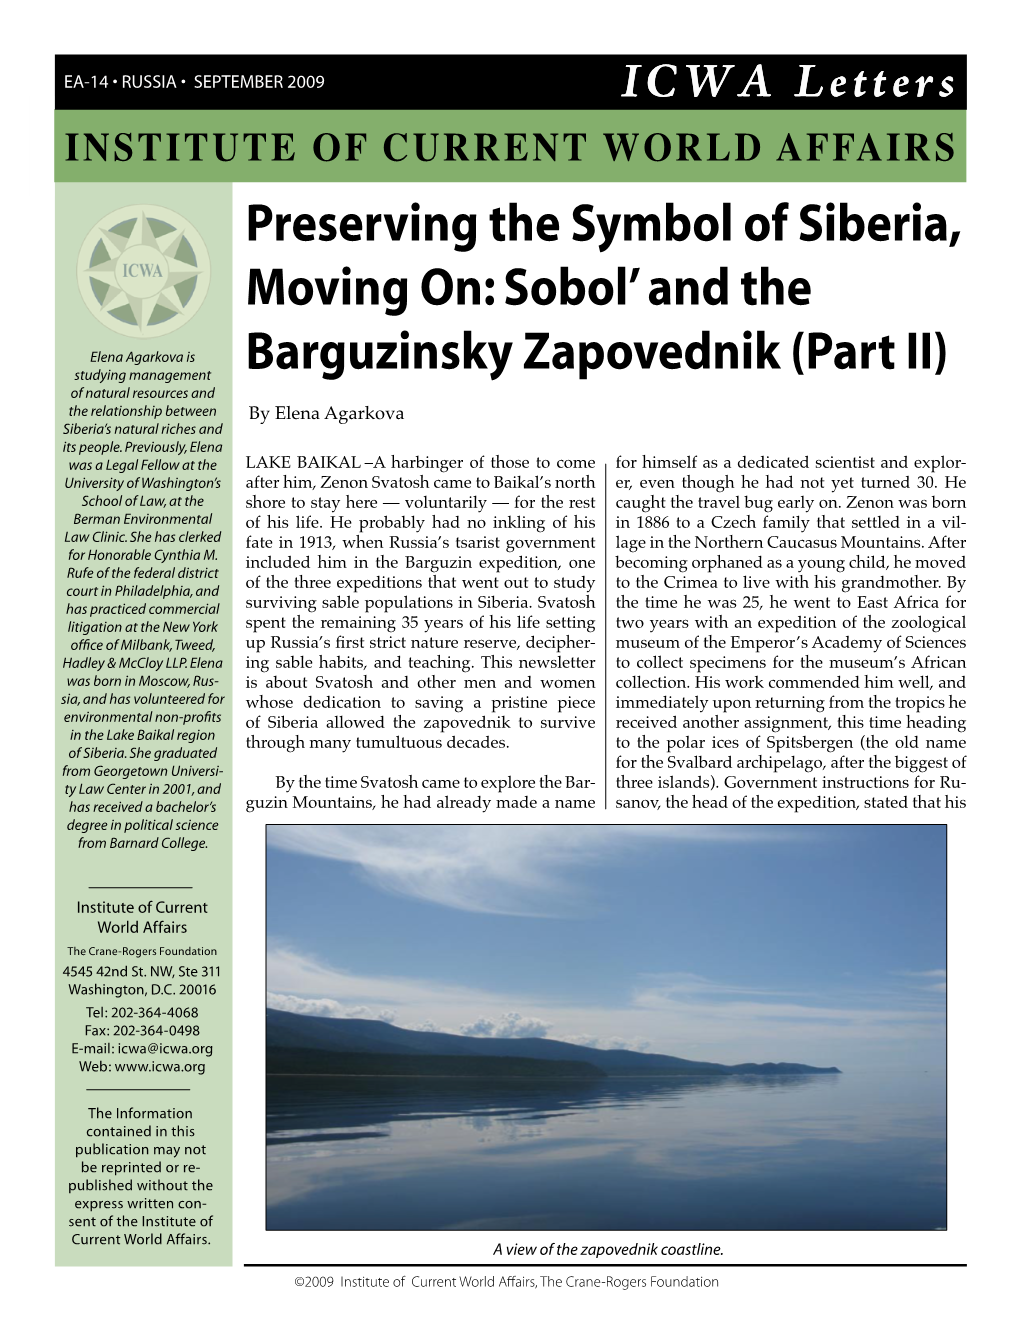 Preserving the Symbol of Siberia, Moving On: Sobol' and the Barguzinsky Zapovednik